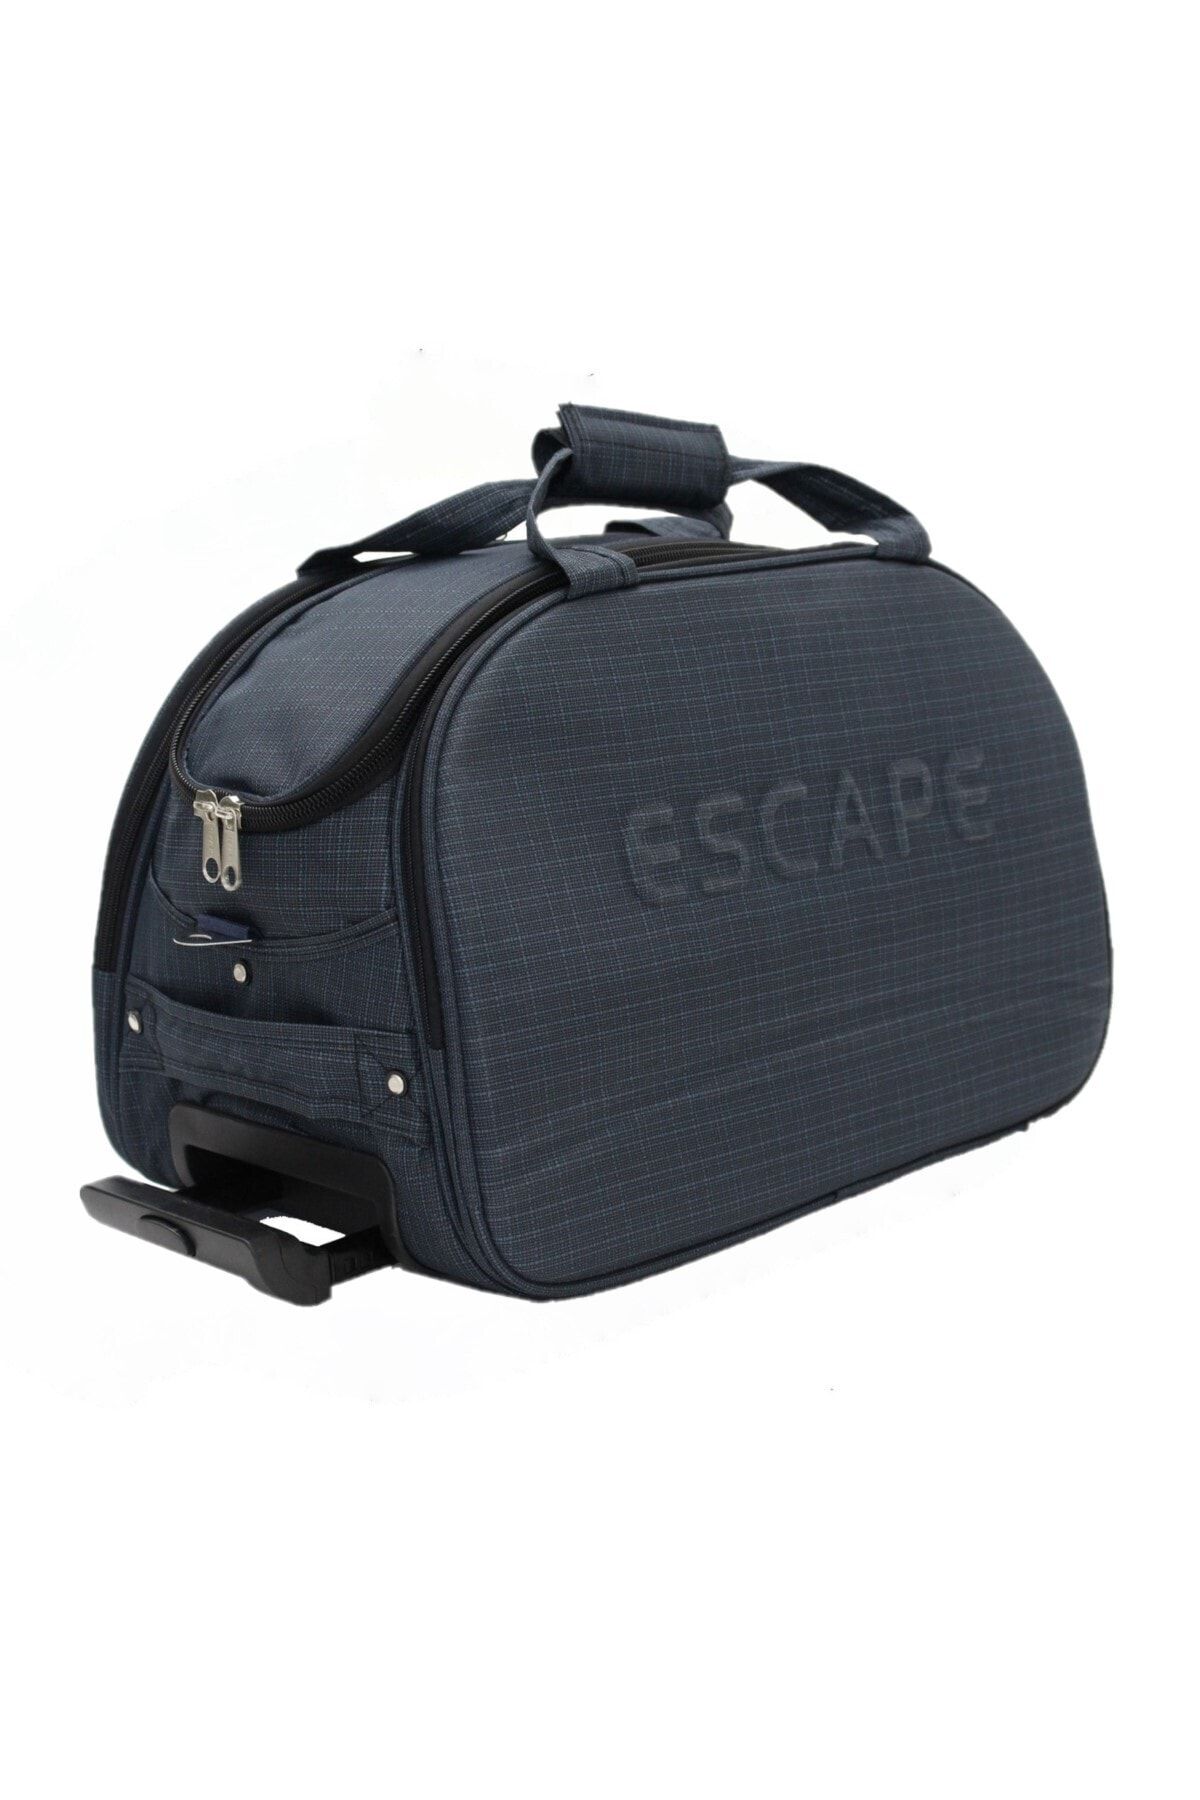 ESCAPE Kabin Boy Tekerlekli Seyahat Çantası & Seyahat Valizi & Seyahat Bavulu Hostes Modeli